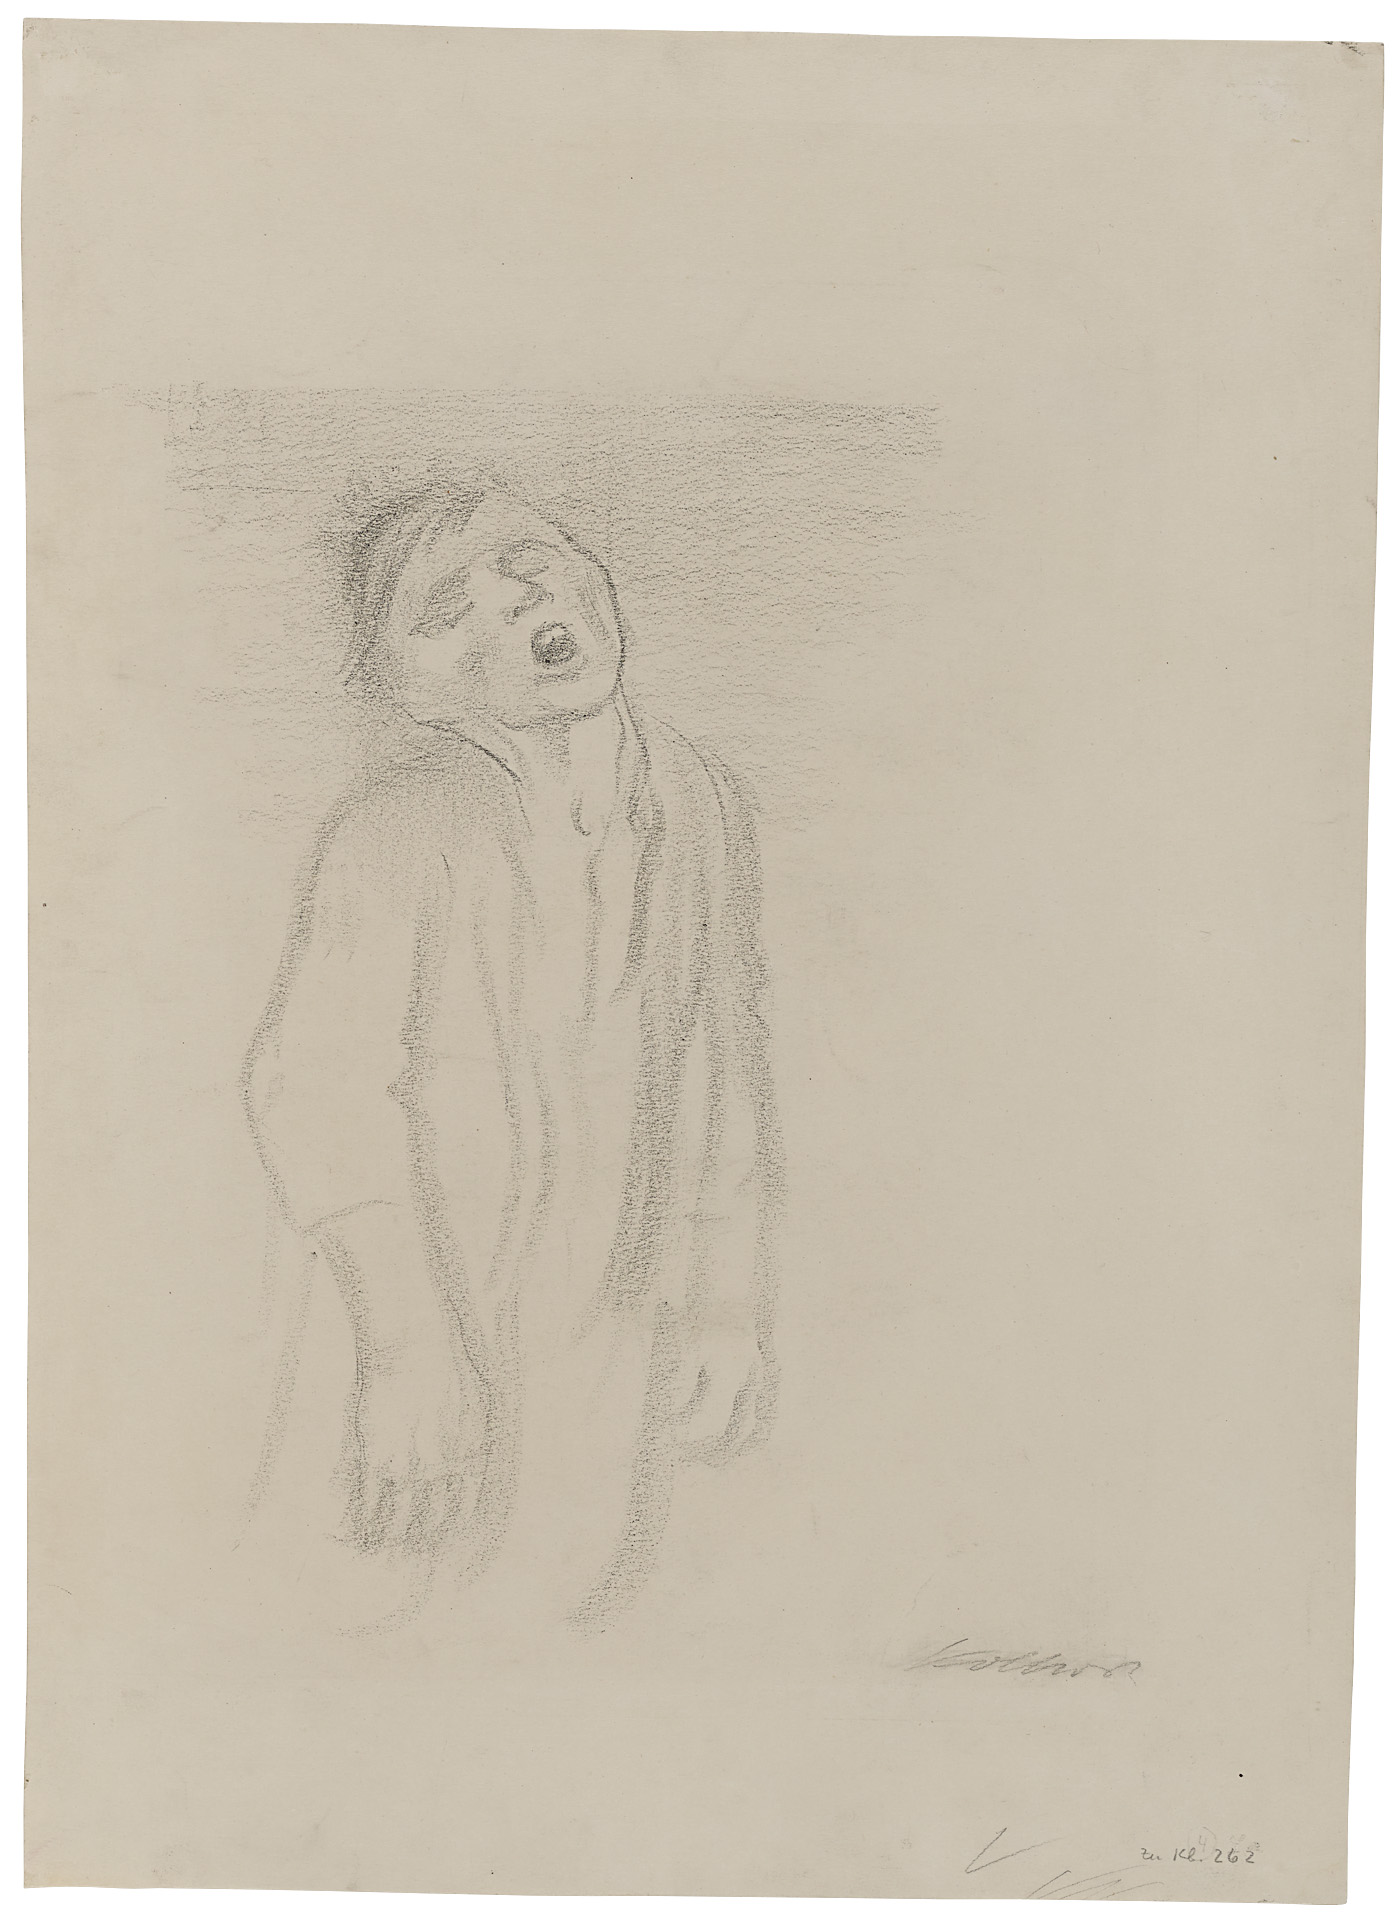 Käthe Kollwitz, Drowning Man, 1934, charcoal on thick, chamois-coloured paper, NT 1258, Cologne Kollwitz Collection © Käthe Kollwitz Museum Köln